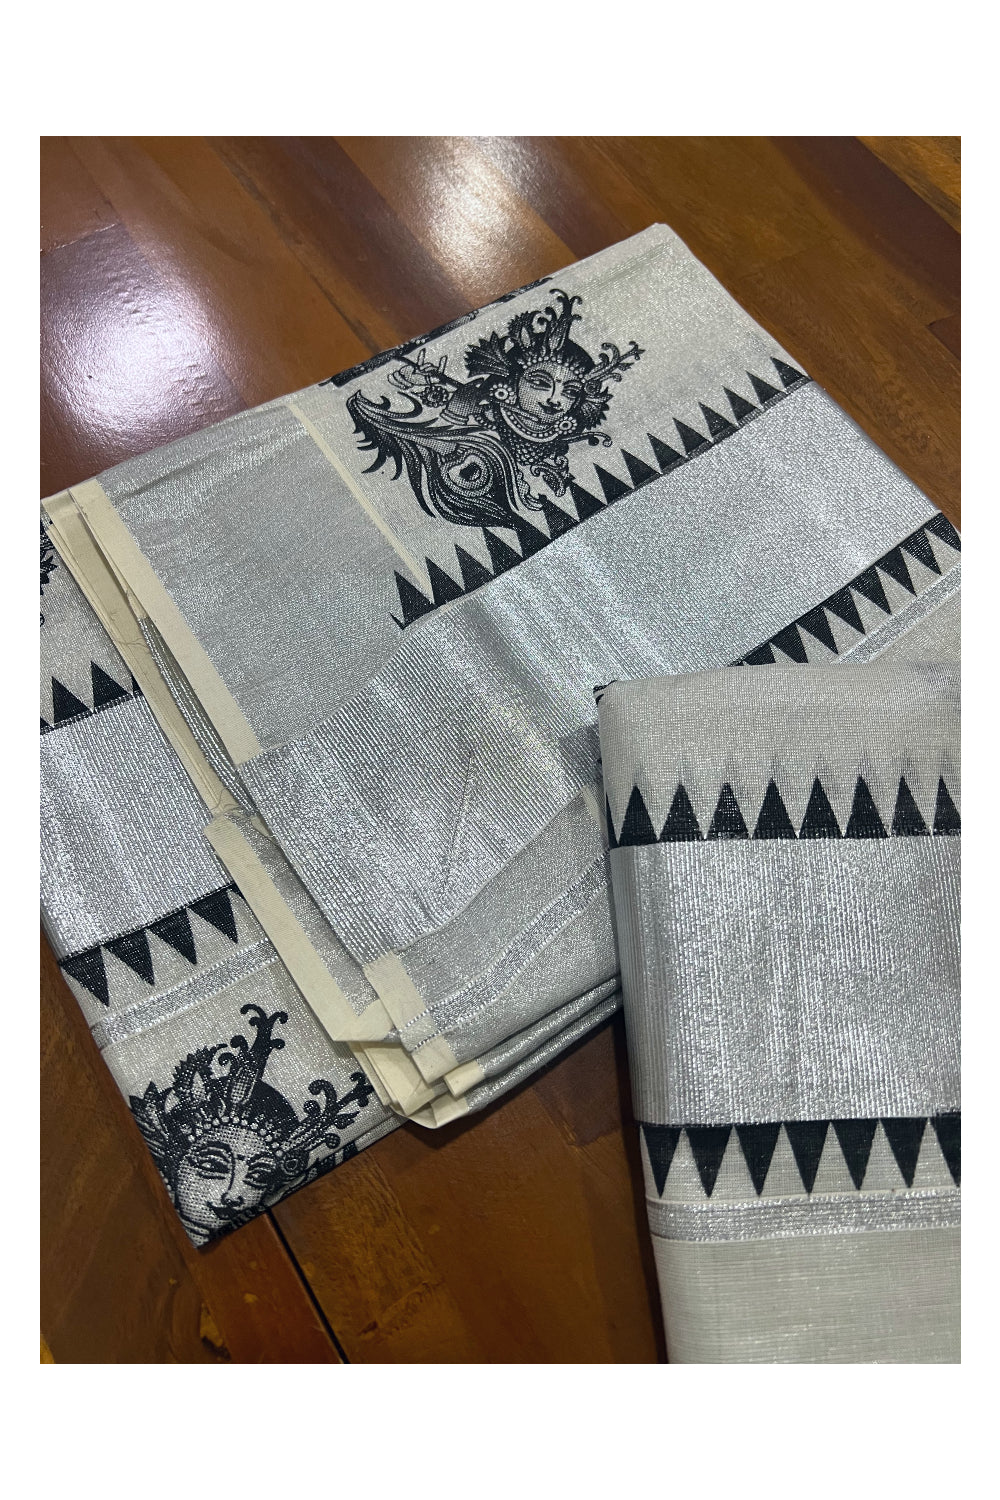 Kerala Silver Tissue Kasavu Set Mundu (Mundum Neriyathum) with Black Krishna Face and Temple Block Prints on Border